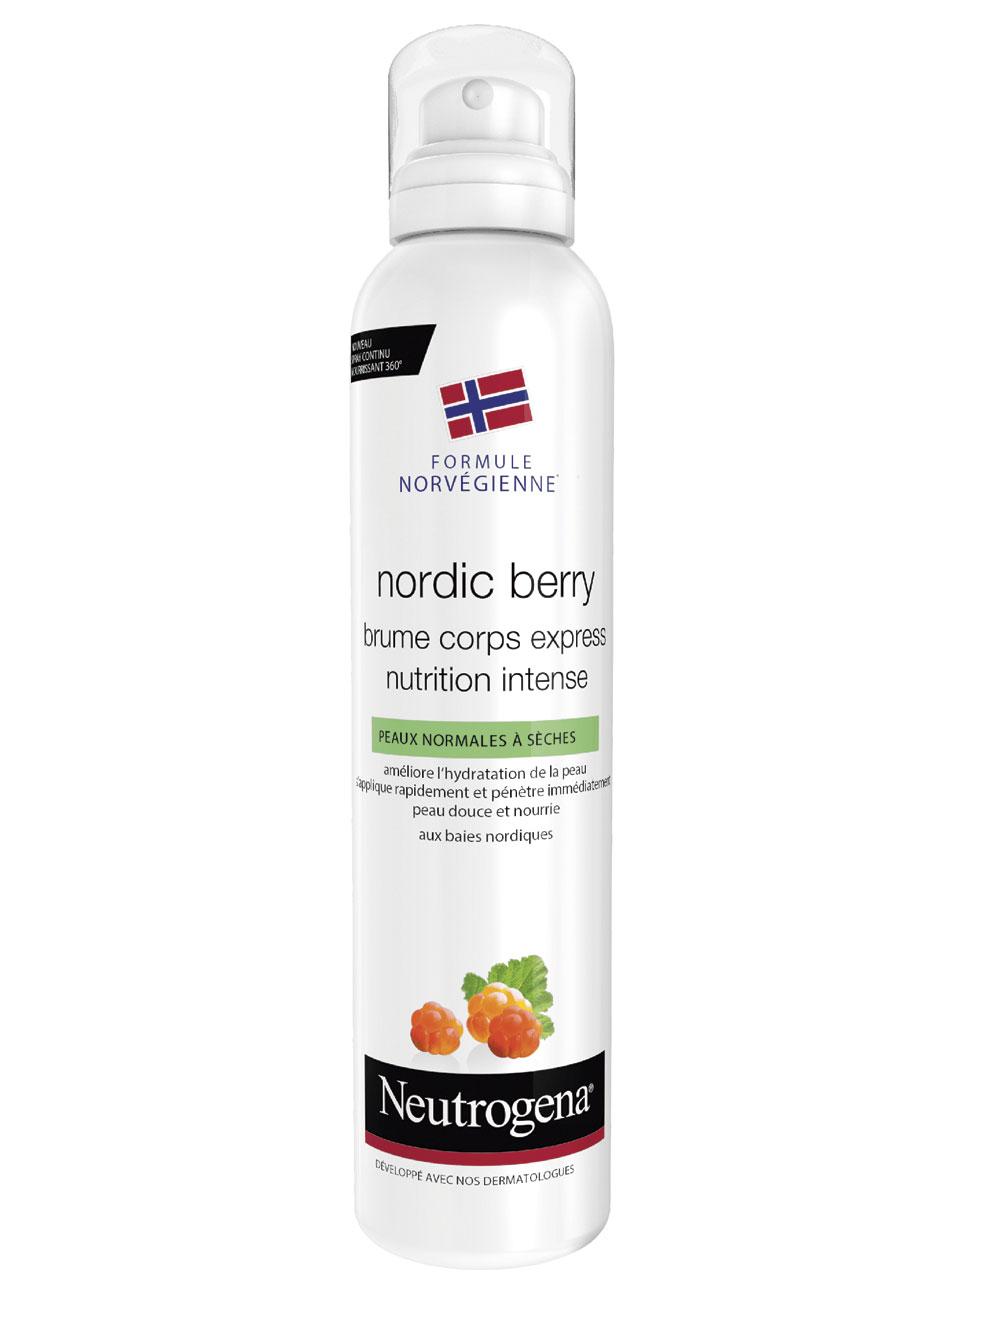 Brume corps express Nordic Berry, Neutrogena, 6,99 euros les 200 ml.